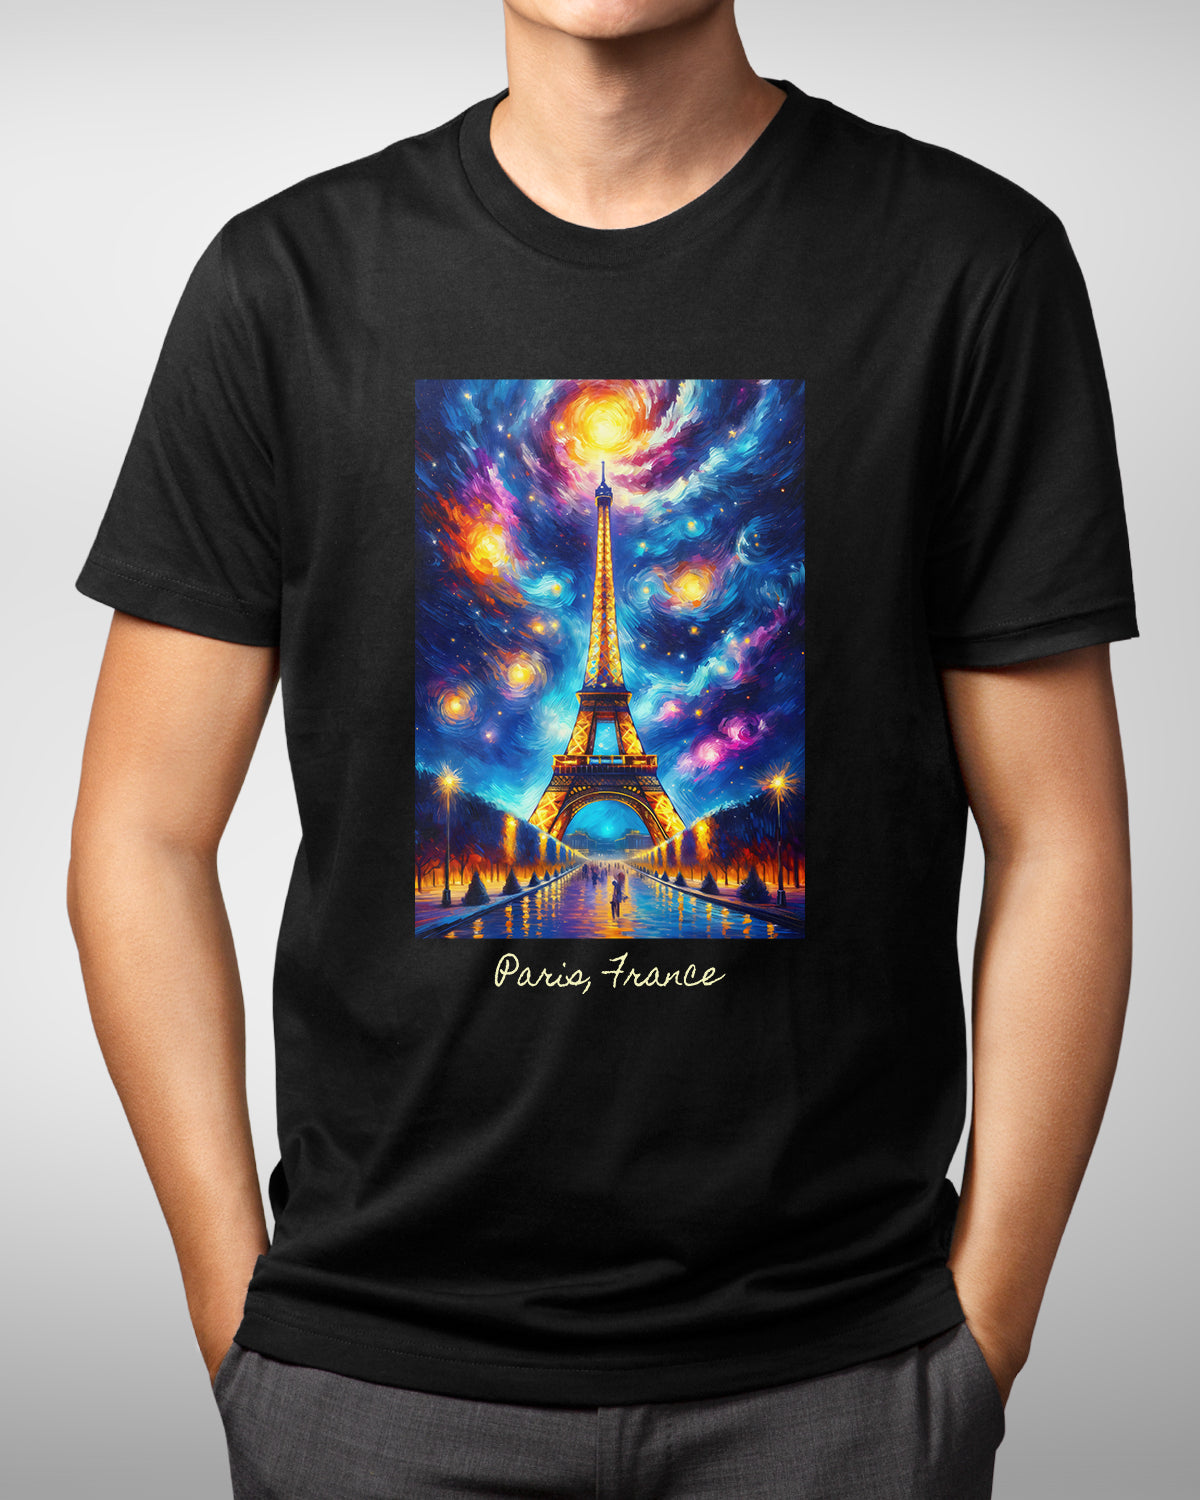 Eiffel Tower Galaxy Shirt, Paris Lover Gift, France Travel Tee, Girls Paris Trip Vacation Top, Architect Cosmic Art Painting Tee